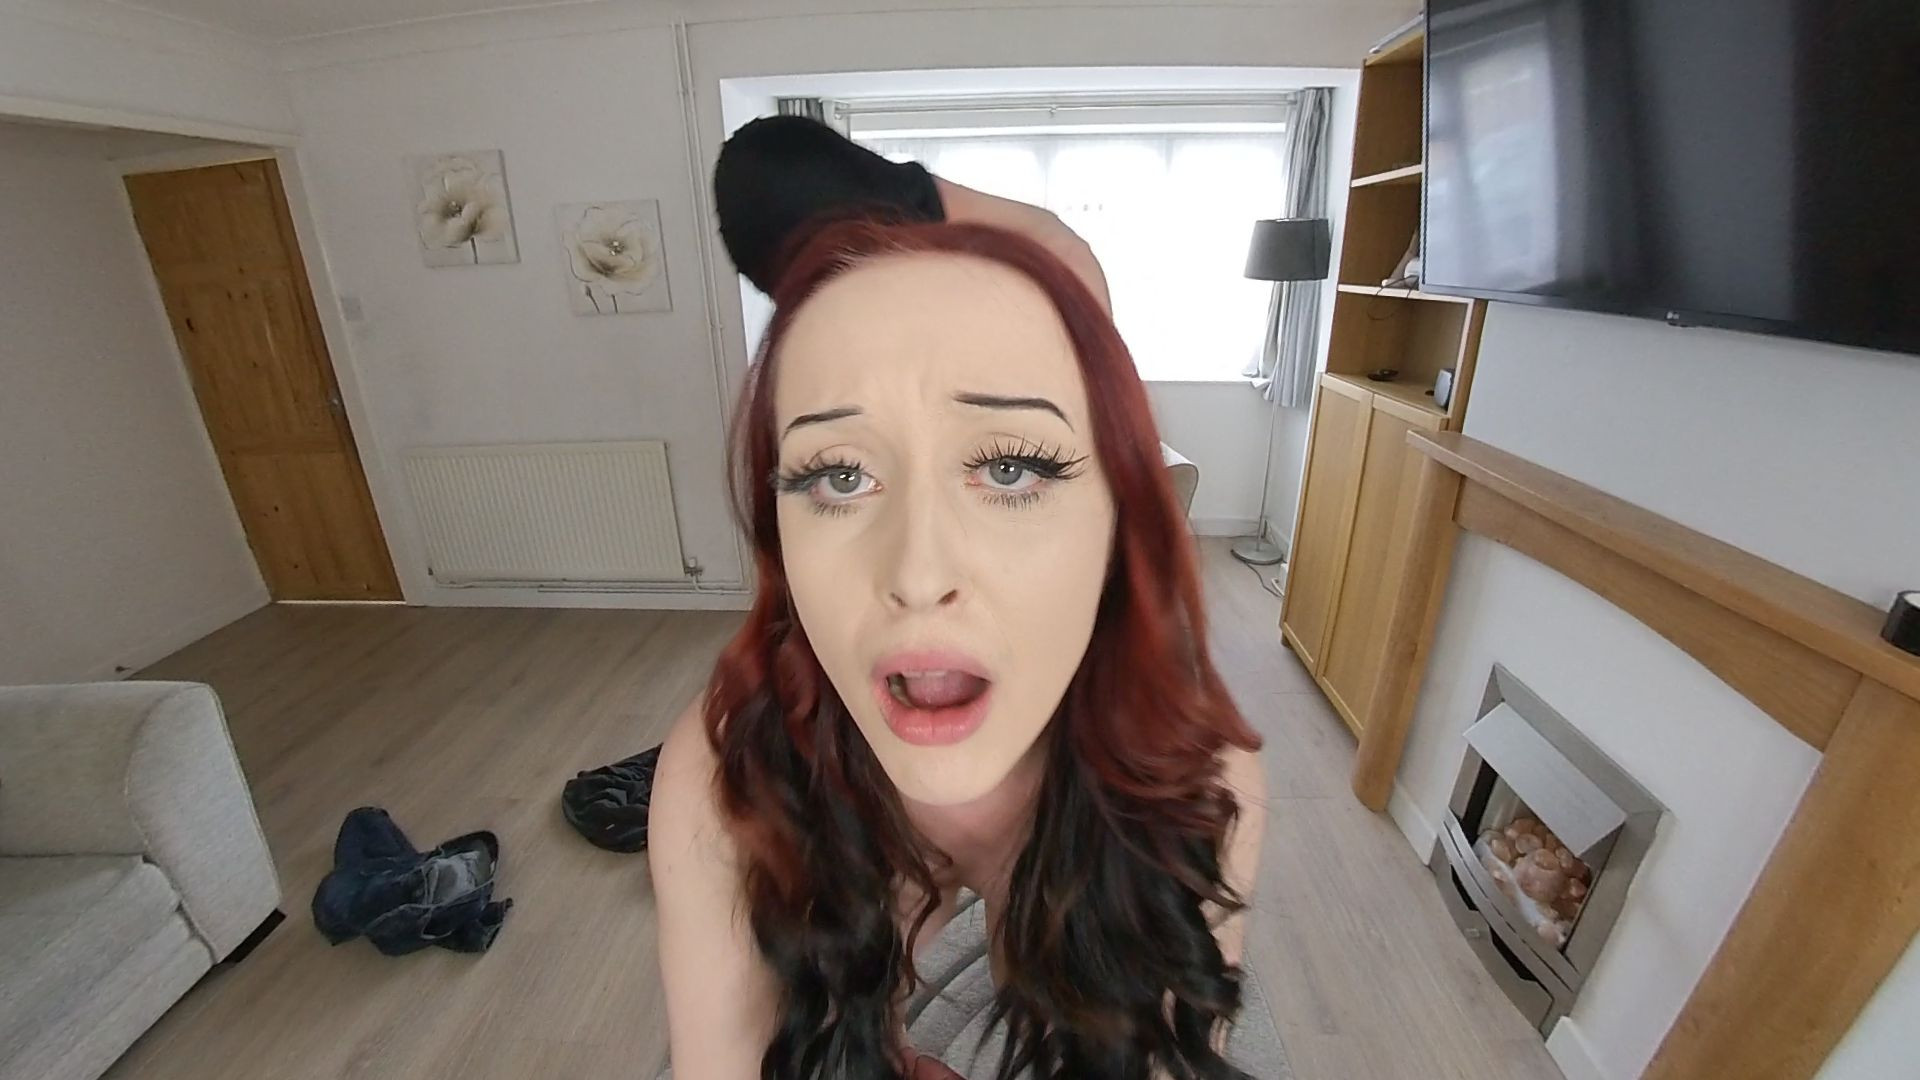 Cuckold Surprise - Girlfriend Sharing VR Close Up Voyeur Slideshow